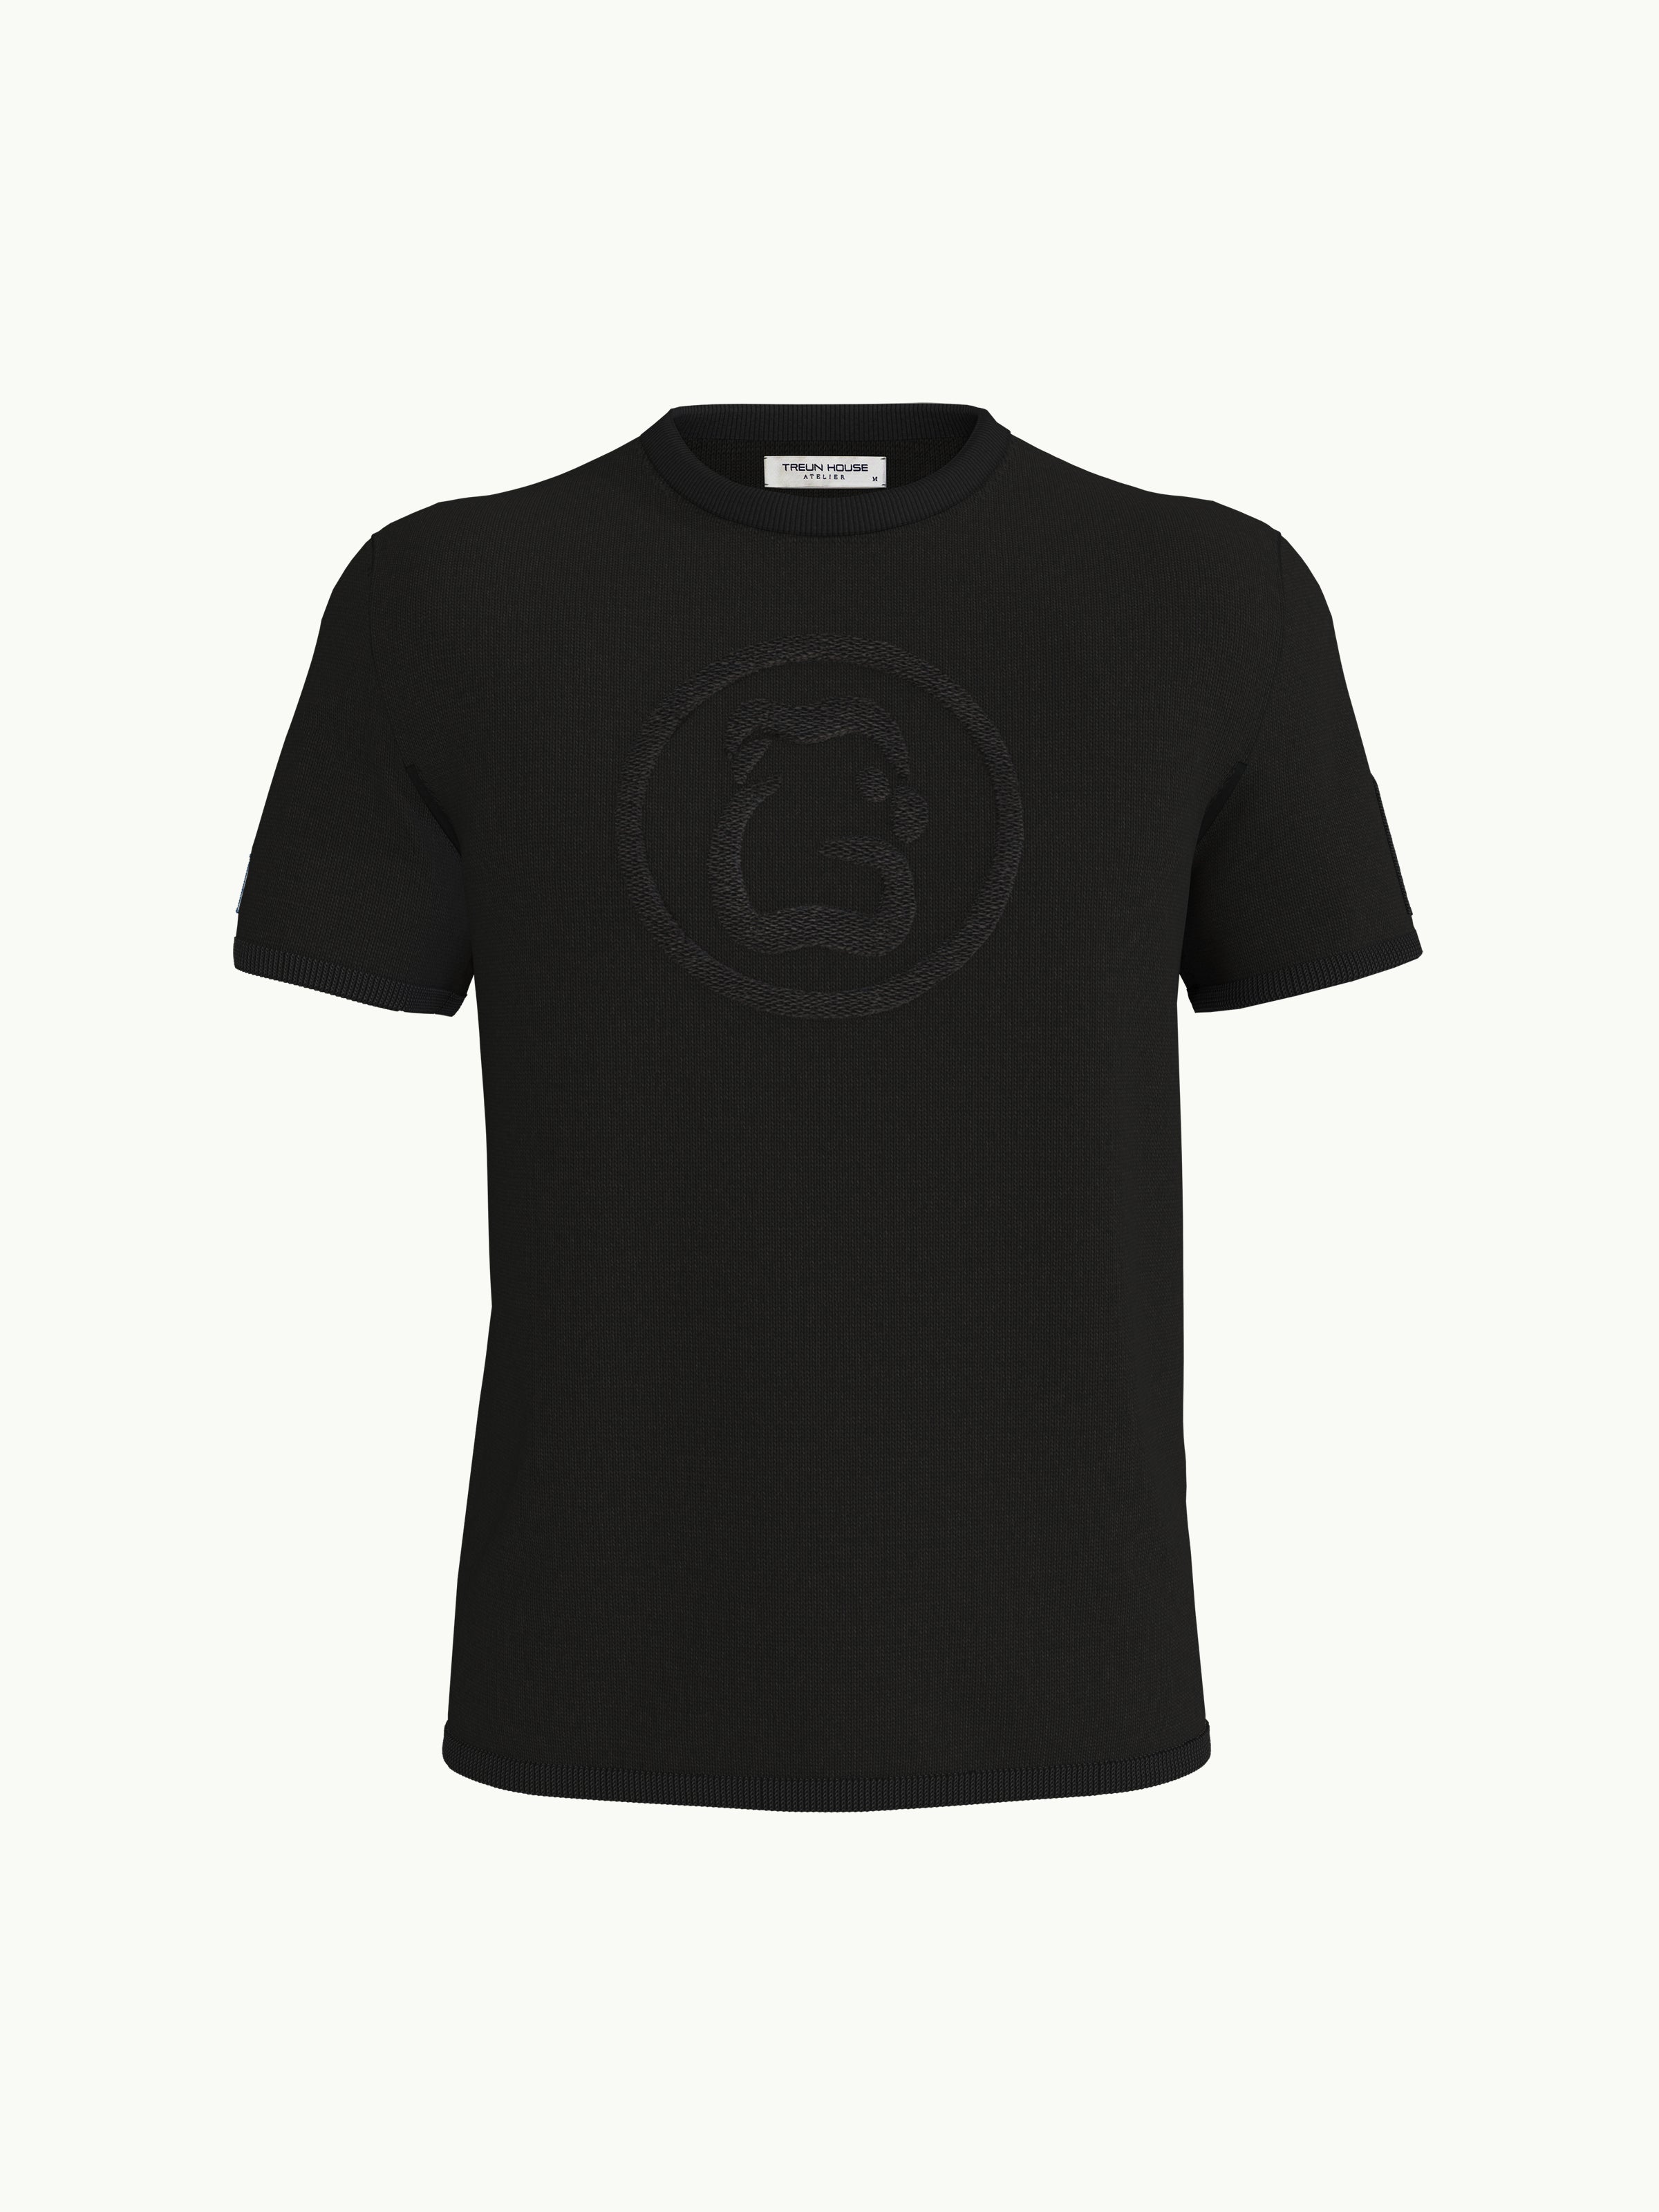 Men's T-Shirt - Glossy Cockatoo Black